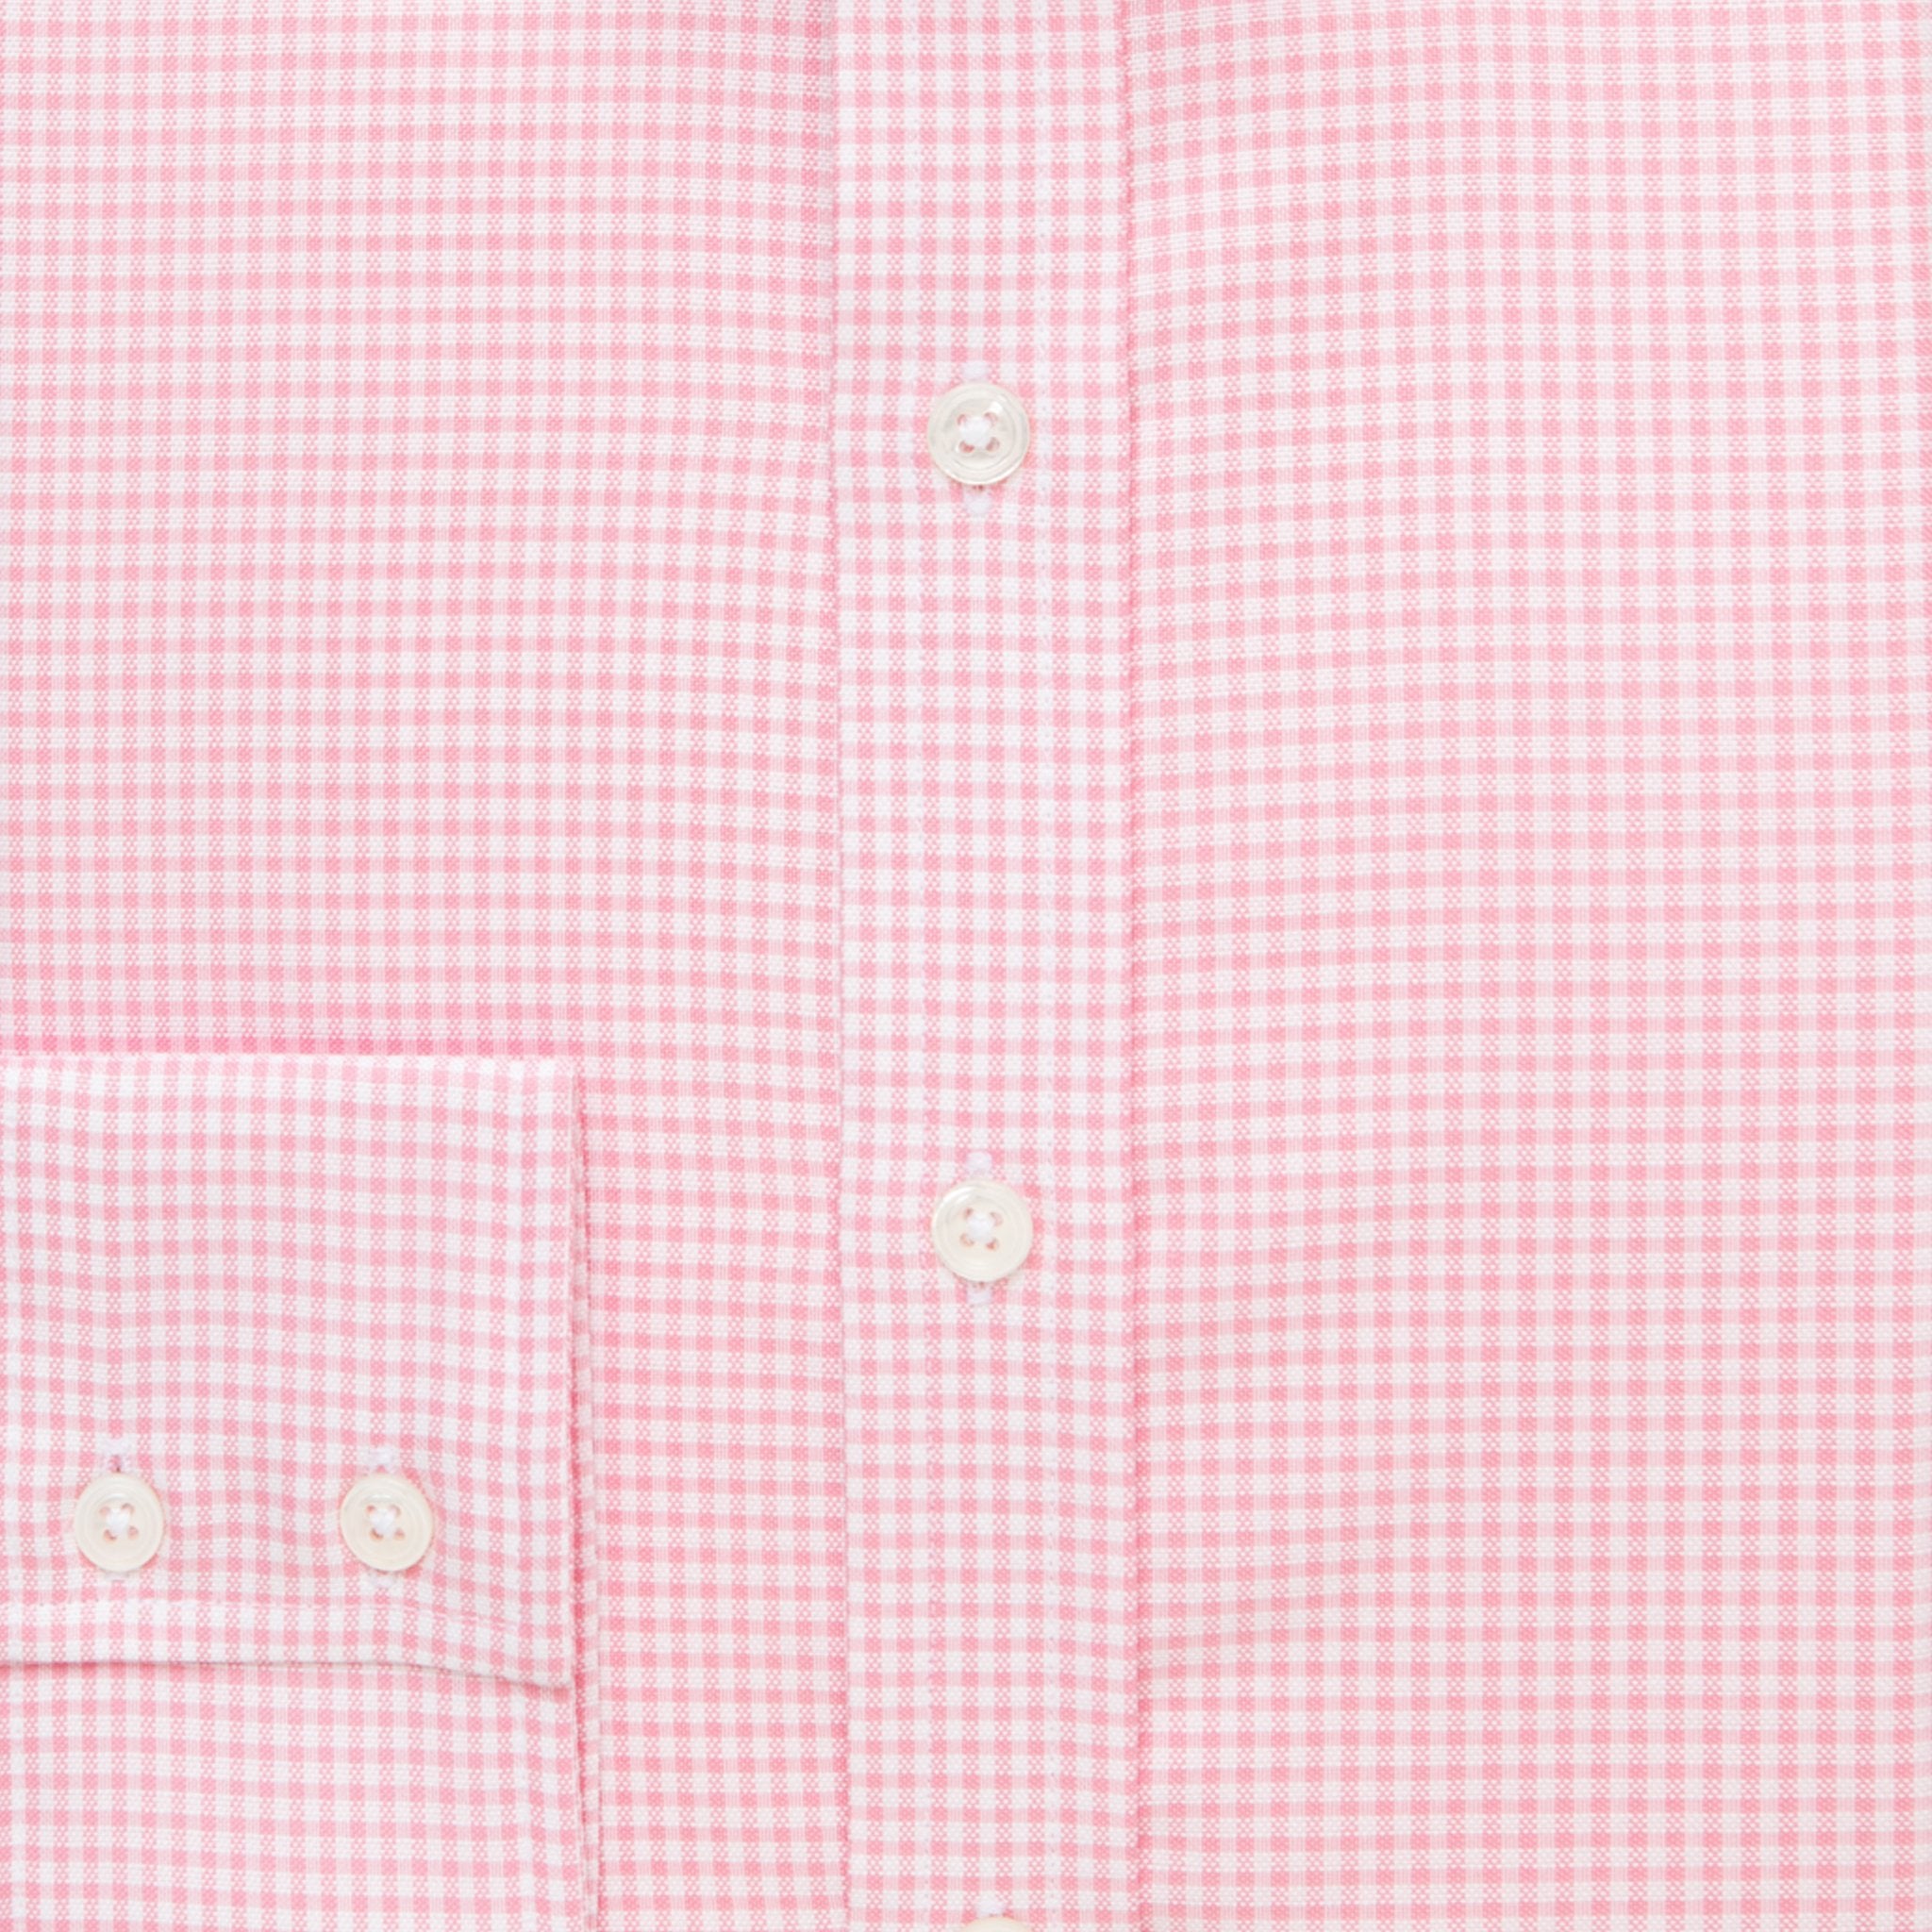 Pink Oxford Check Cotton Shirt - Bespoke freeshipping - Emma Willis